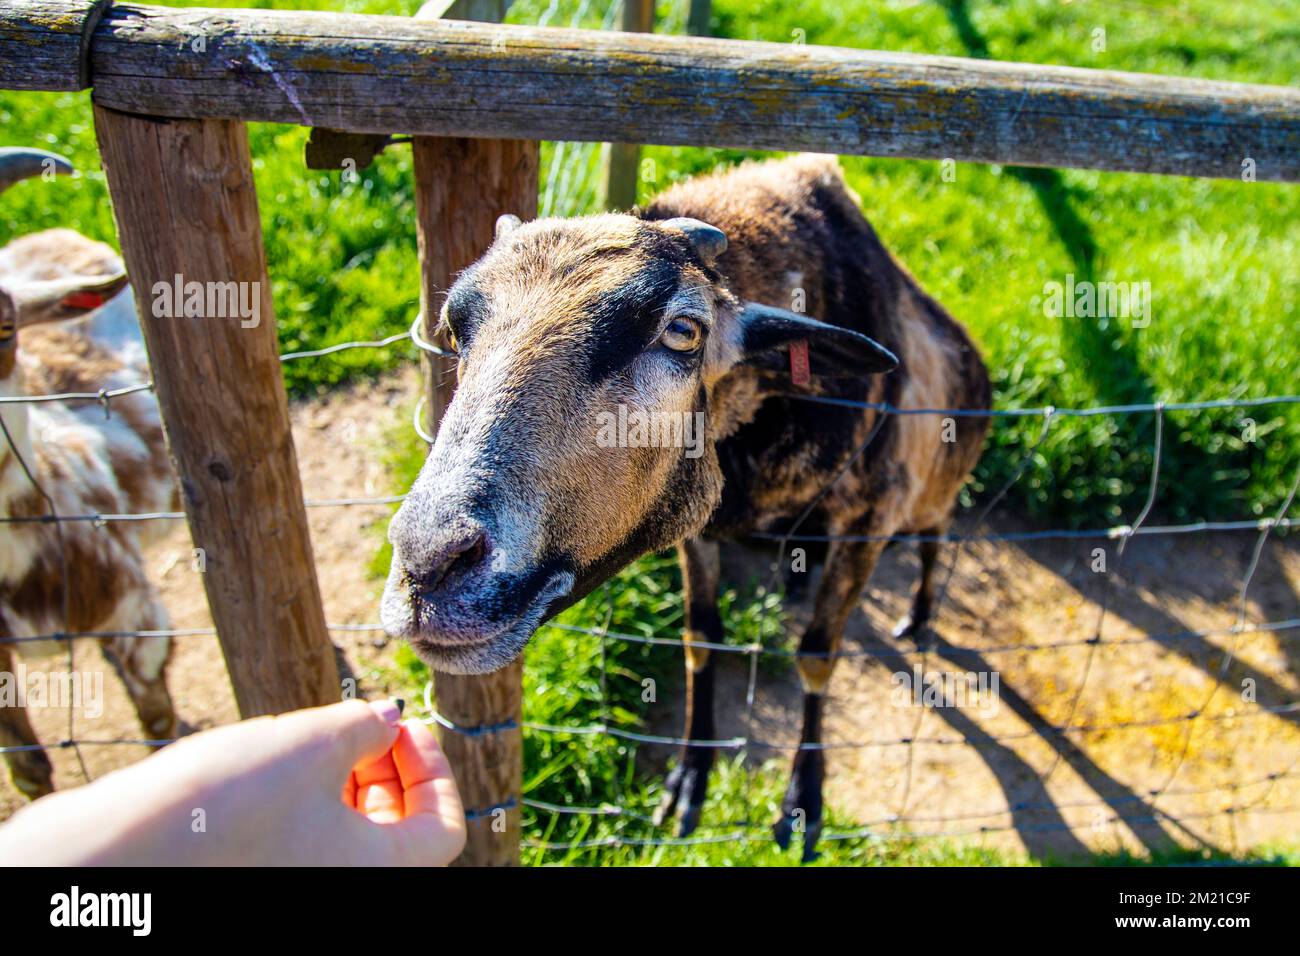 Feeding a goat at Jimmy's Farm & Wildlife Park, Suffolk, UK Stock Photo